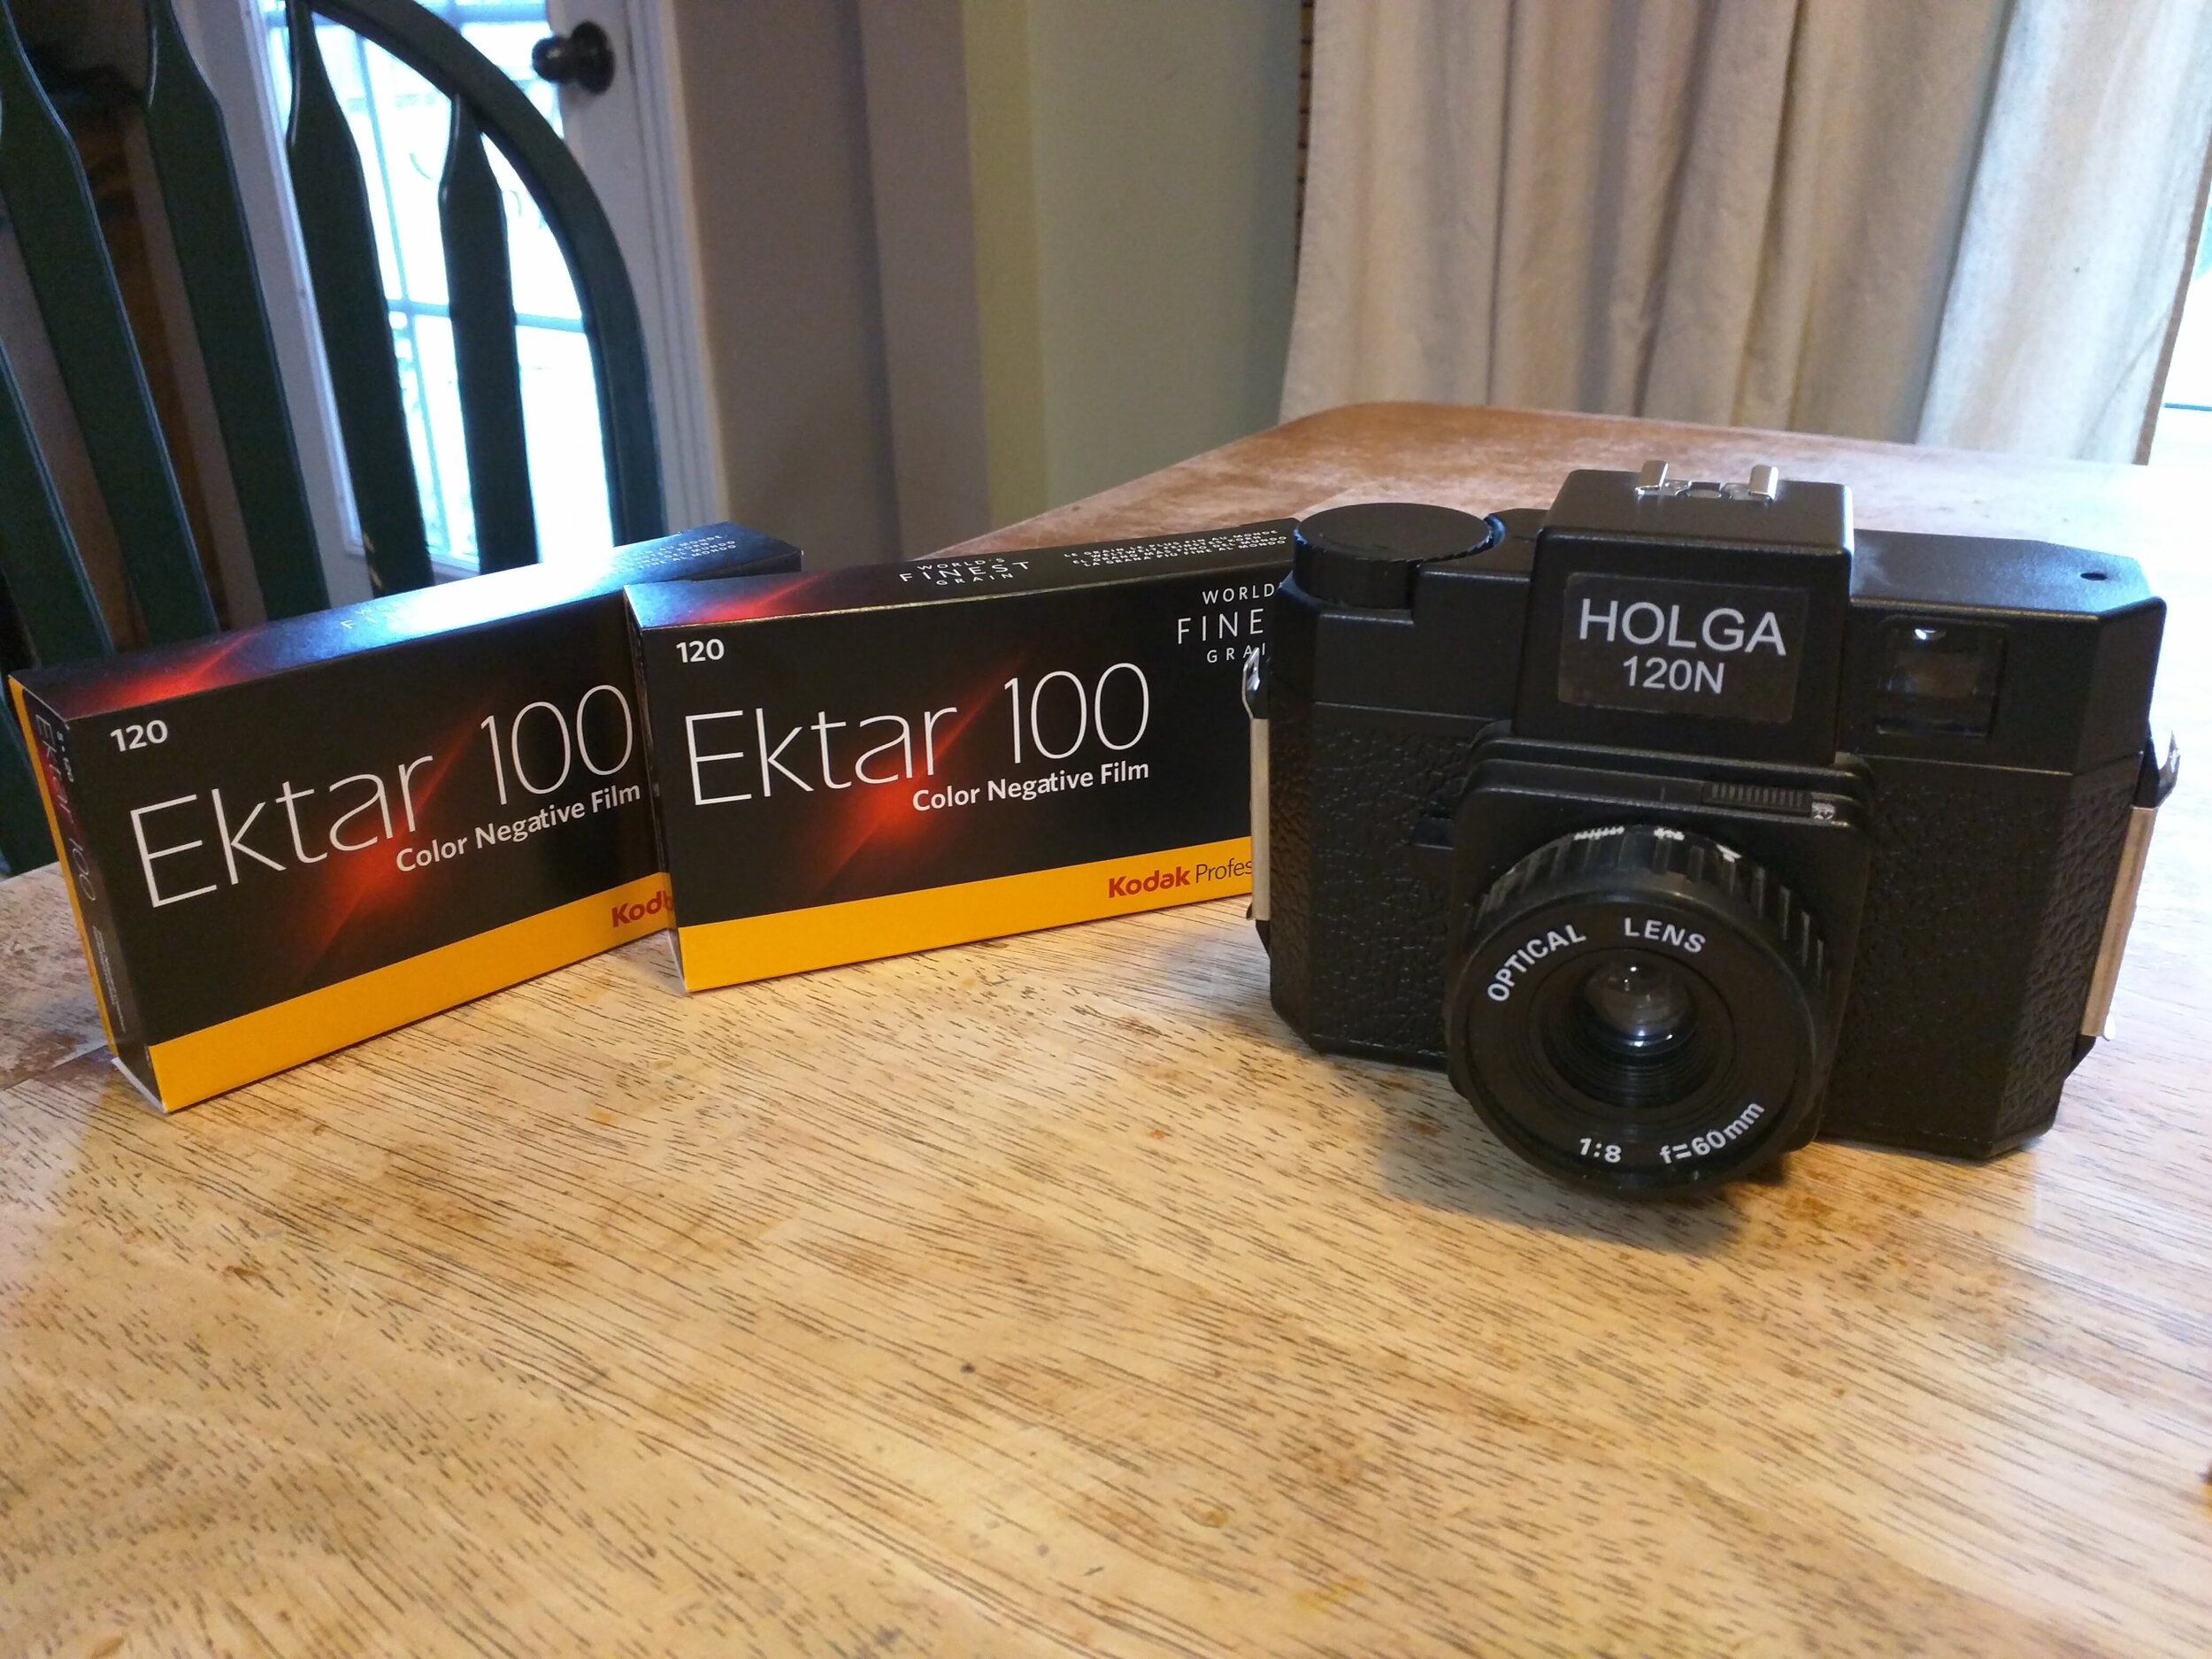 Holga 120 with Kodak Ektar 100, my favorite color film.